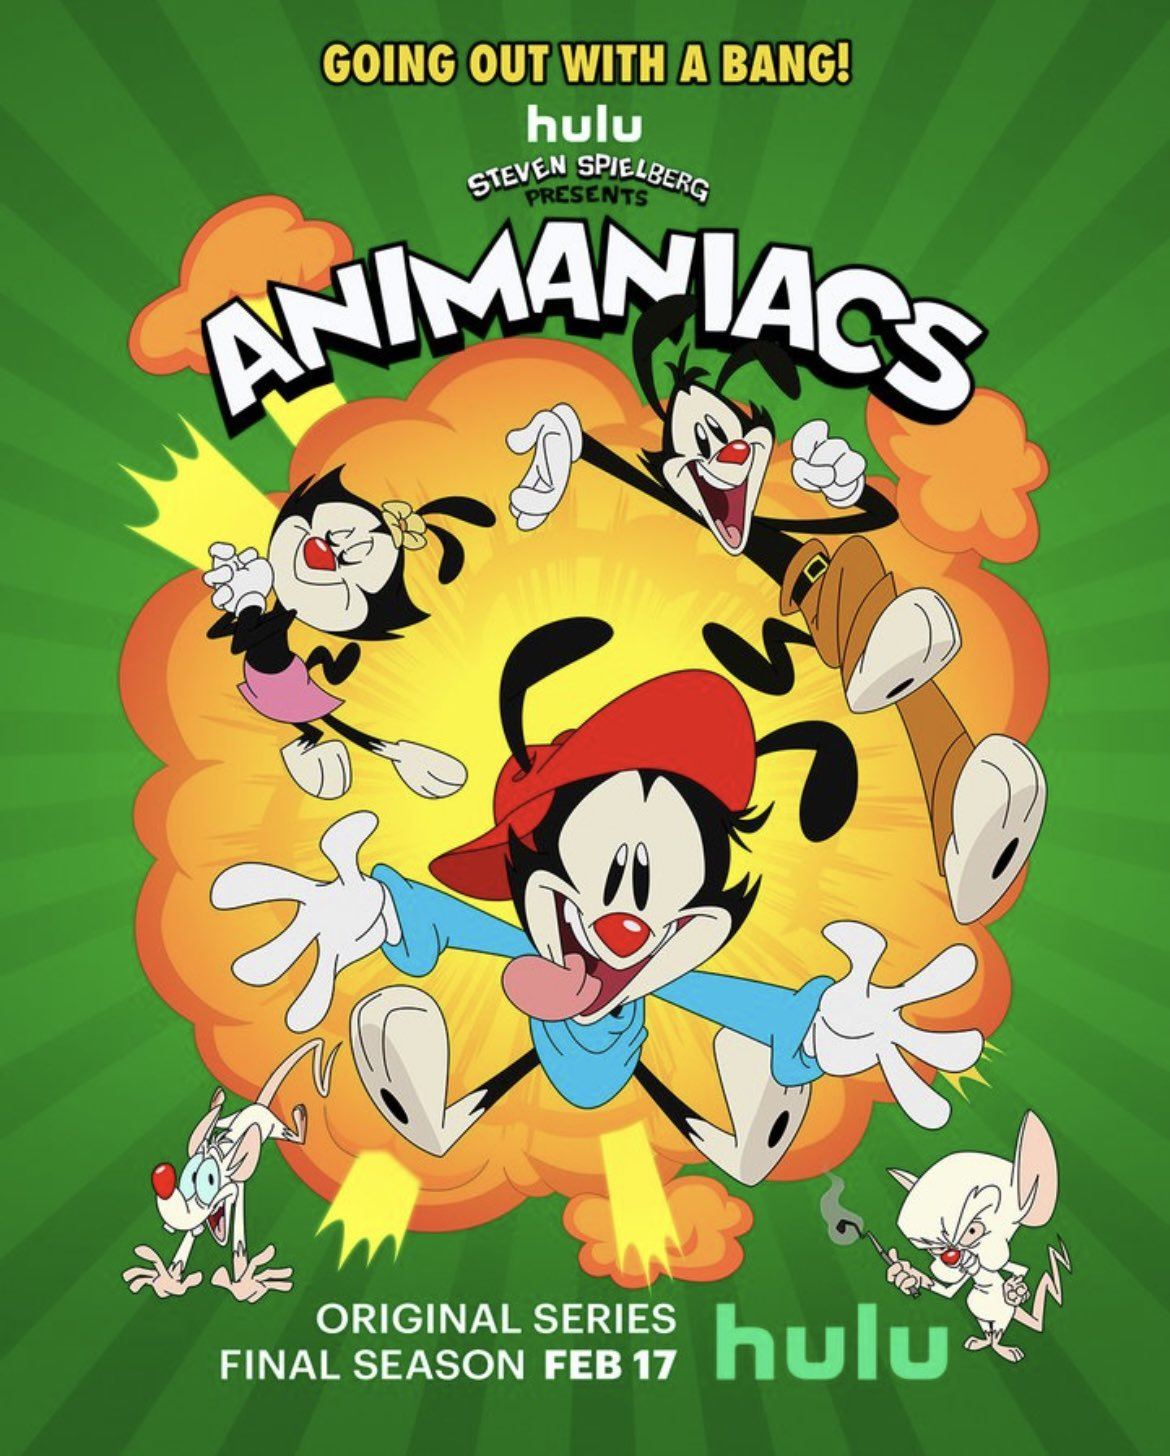 Animaniacs Season 3